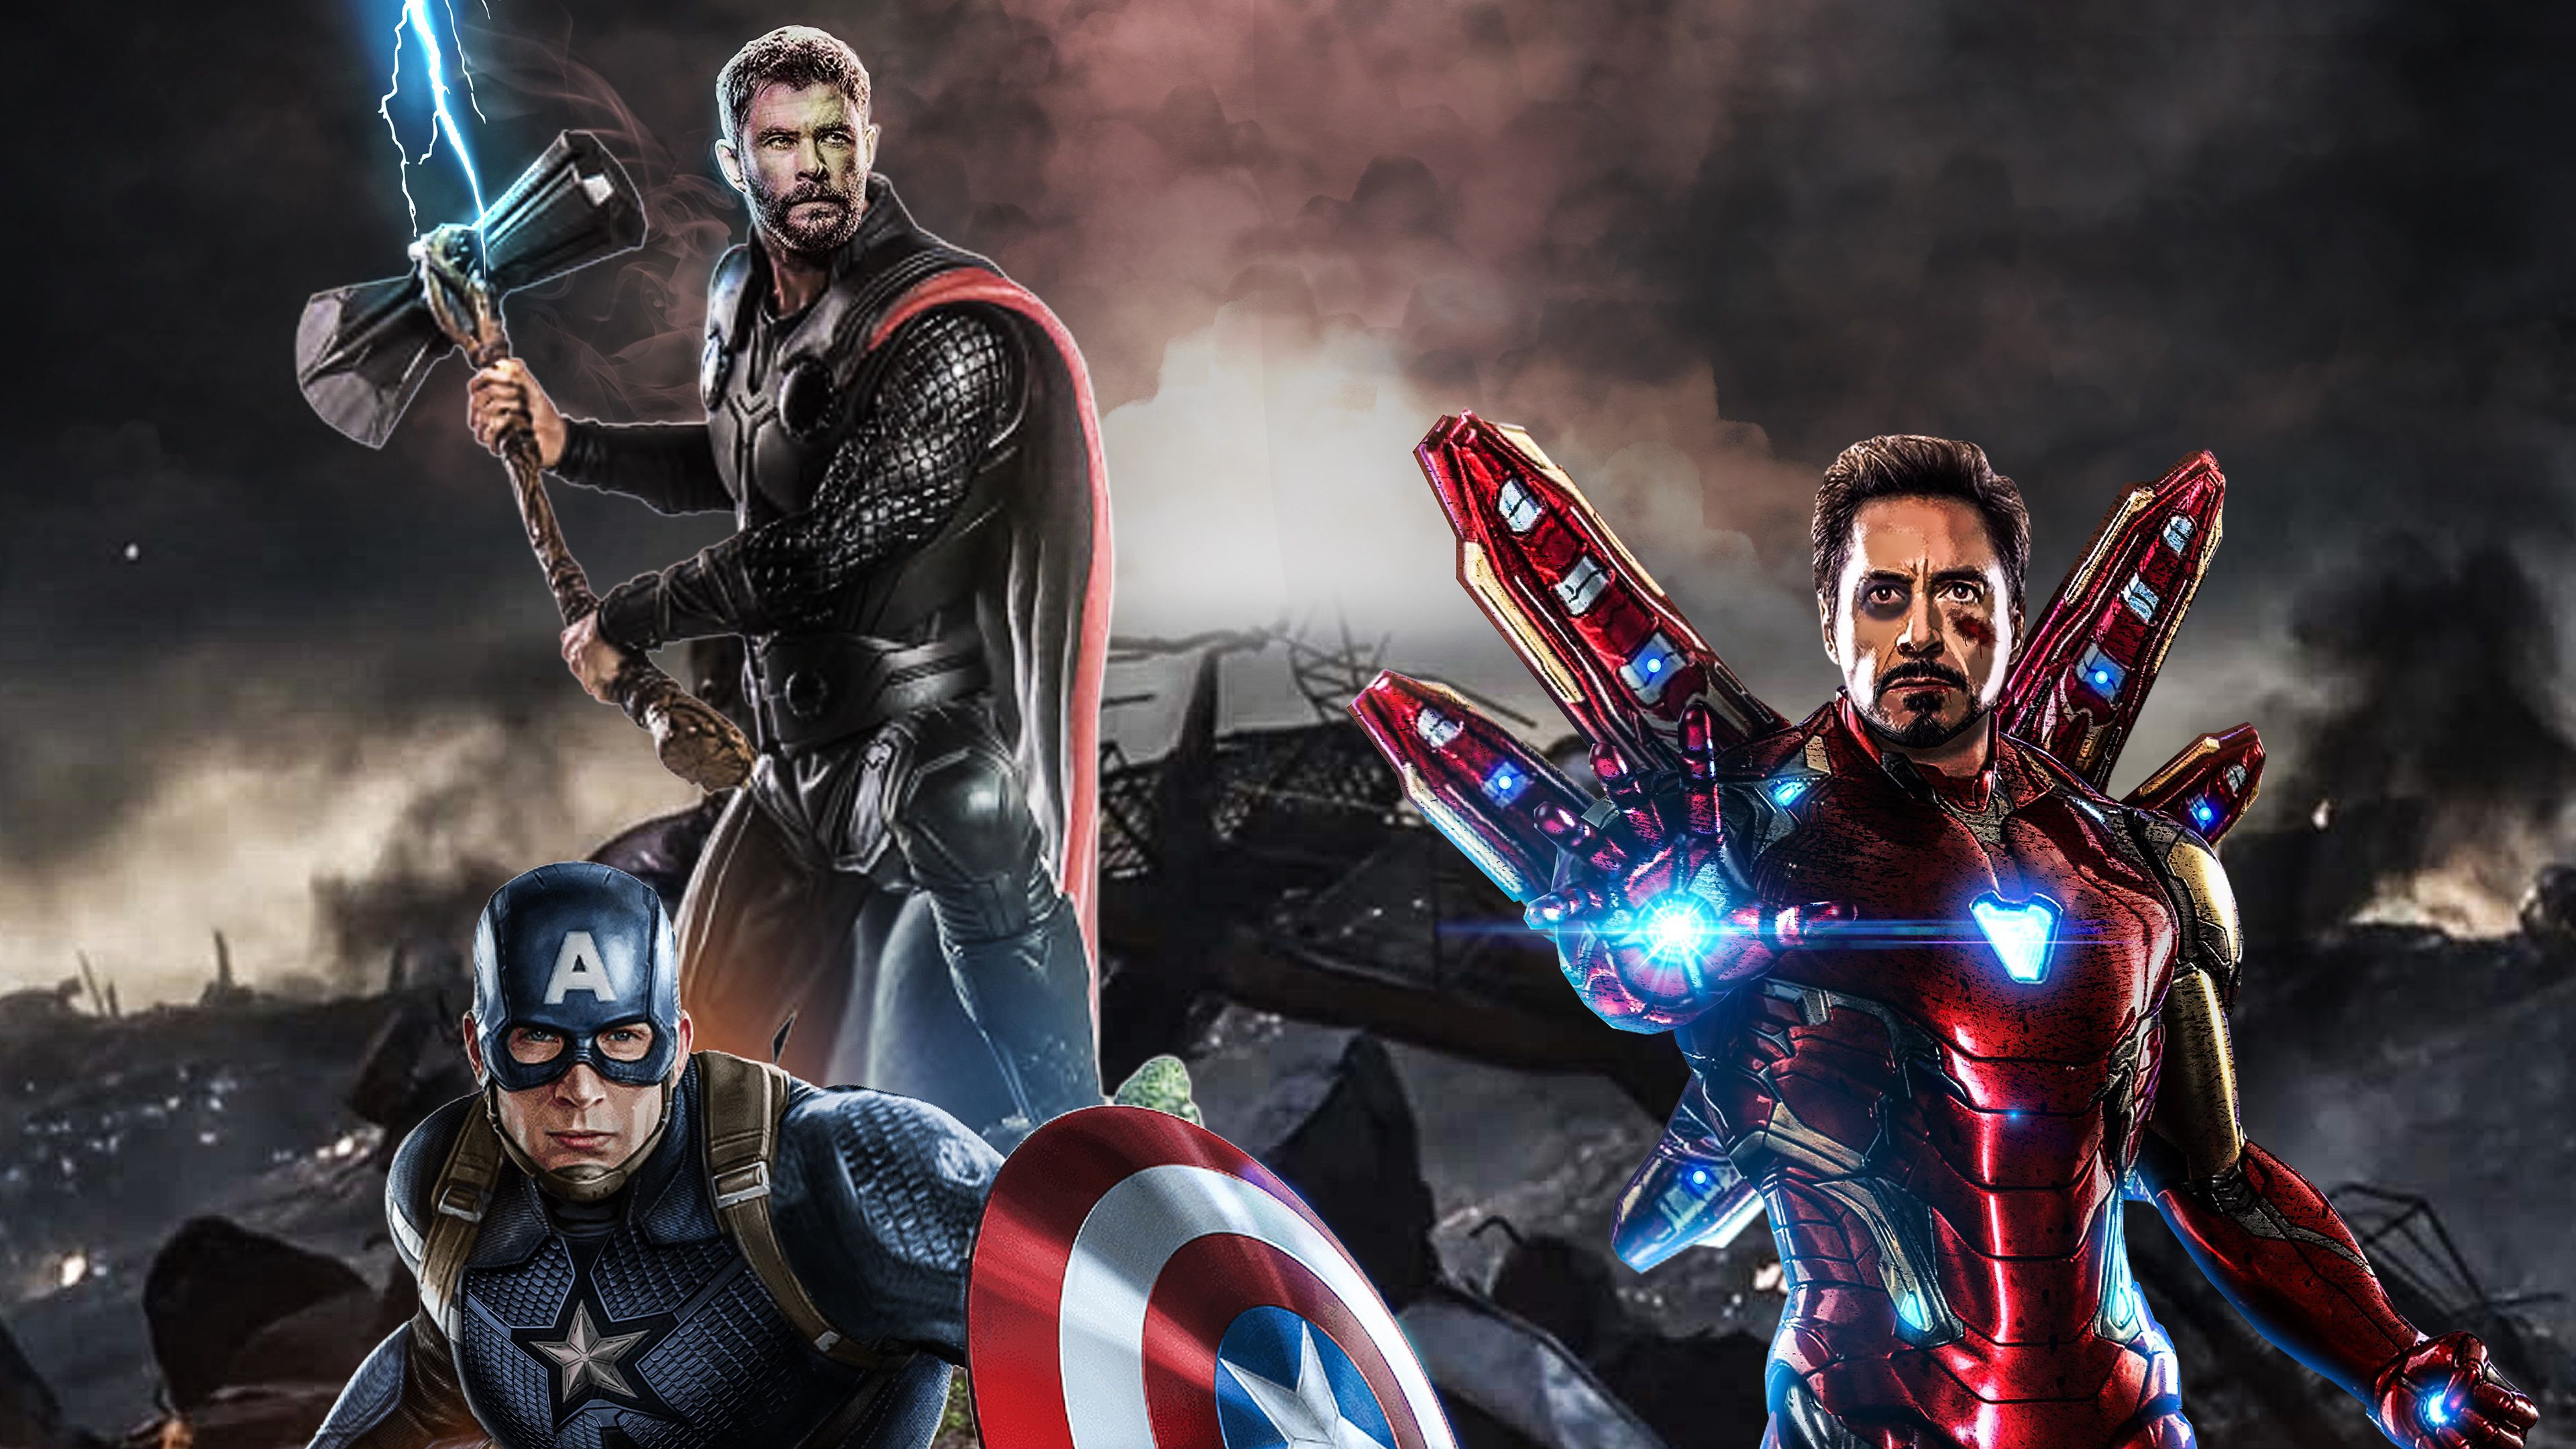 Wallpaper 4k Avengers Endgame The Big Three 4k 2019 movies